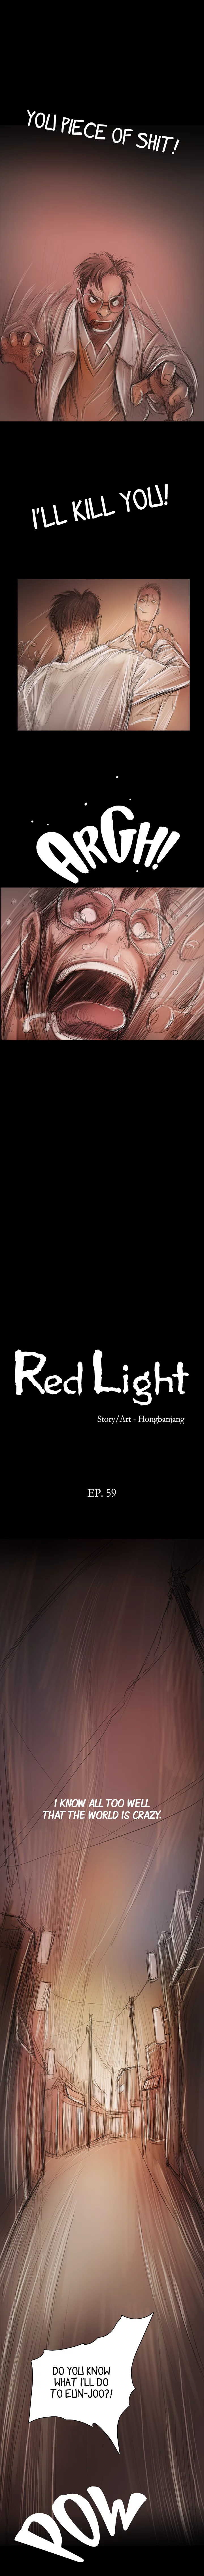 Red Light image